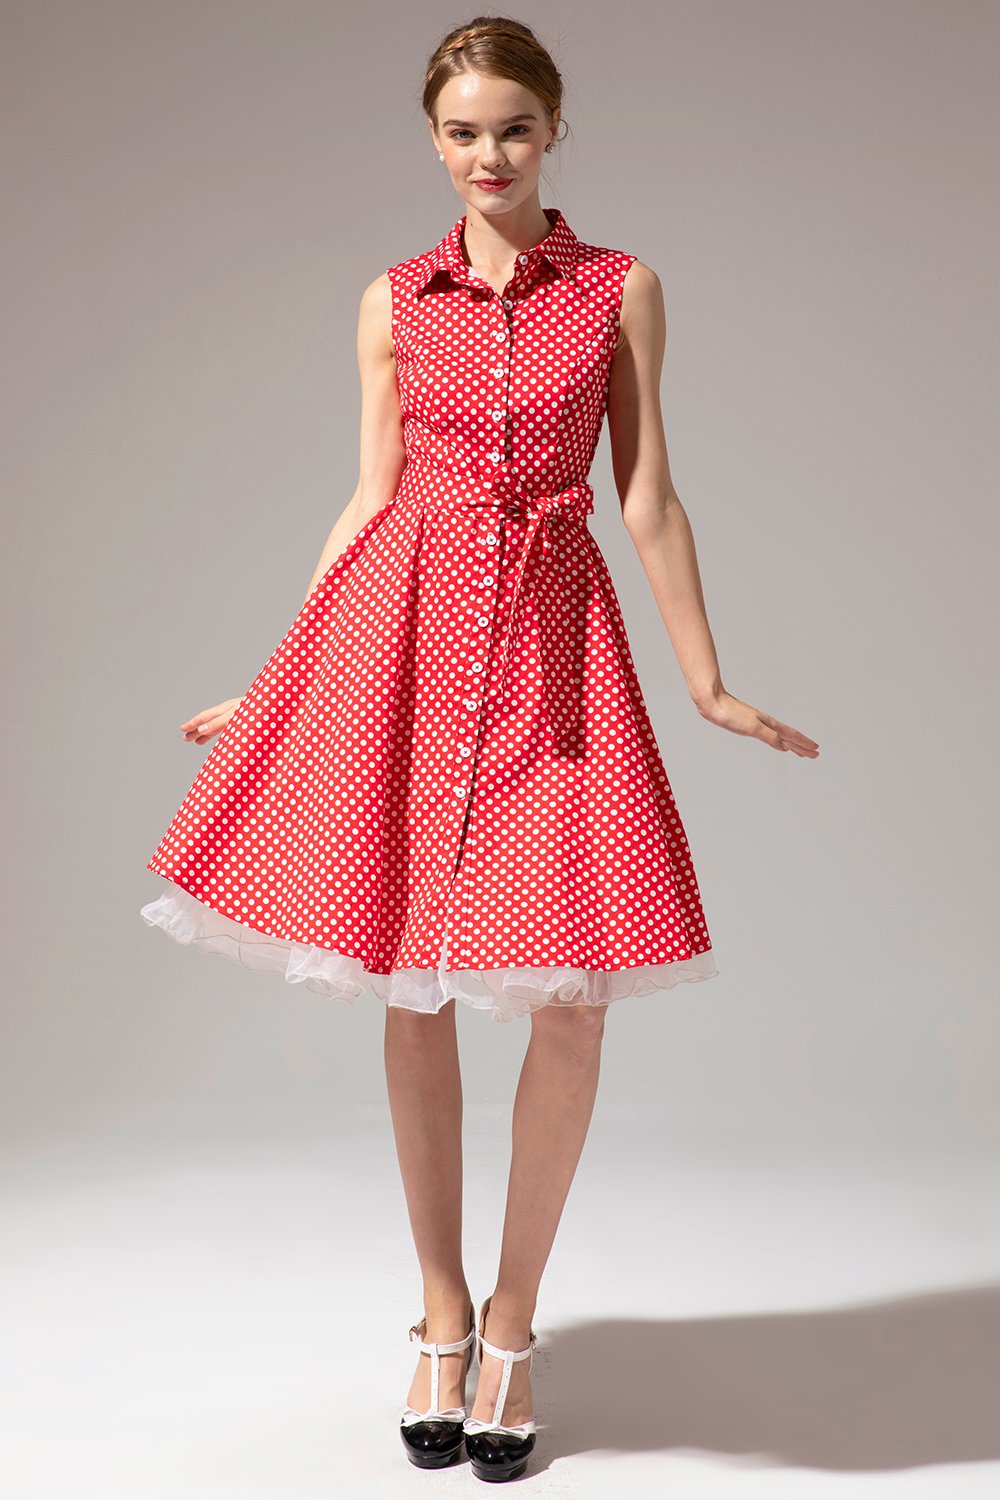 ermeløs polka dot 1950-tallet kjole